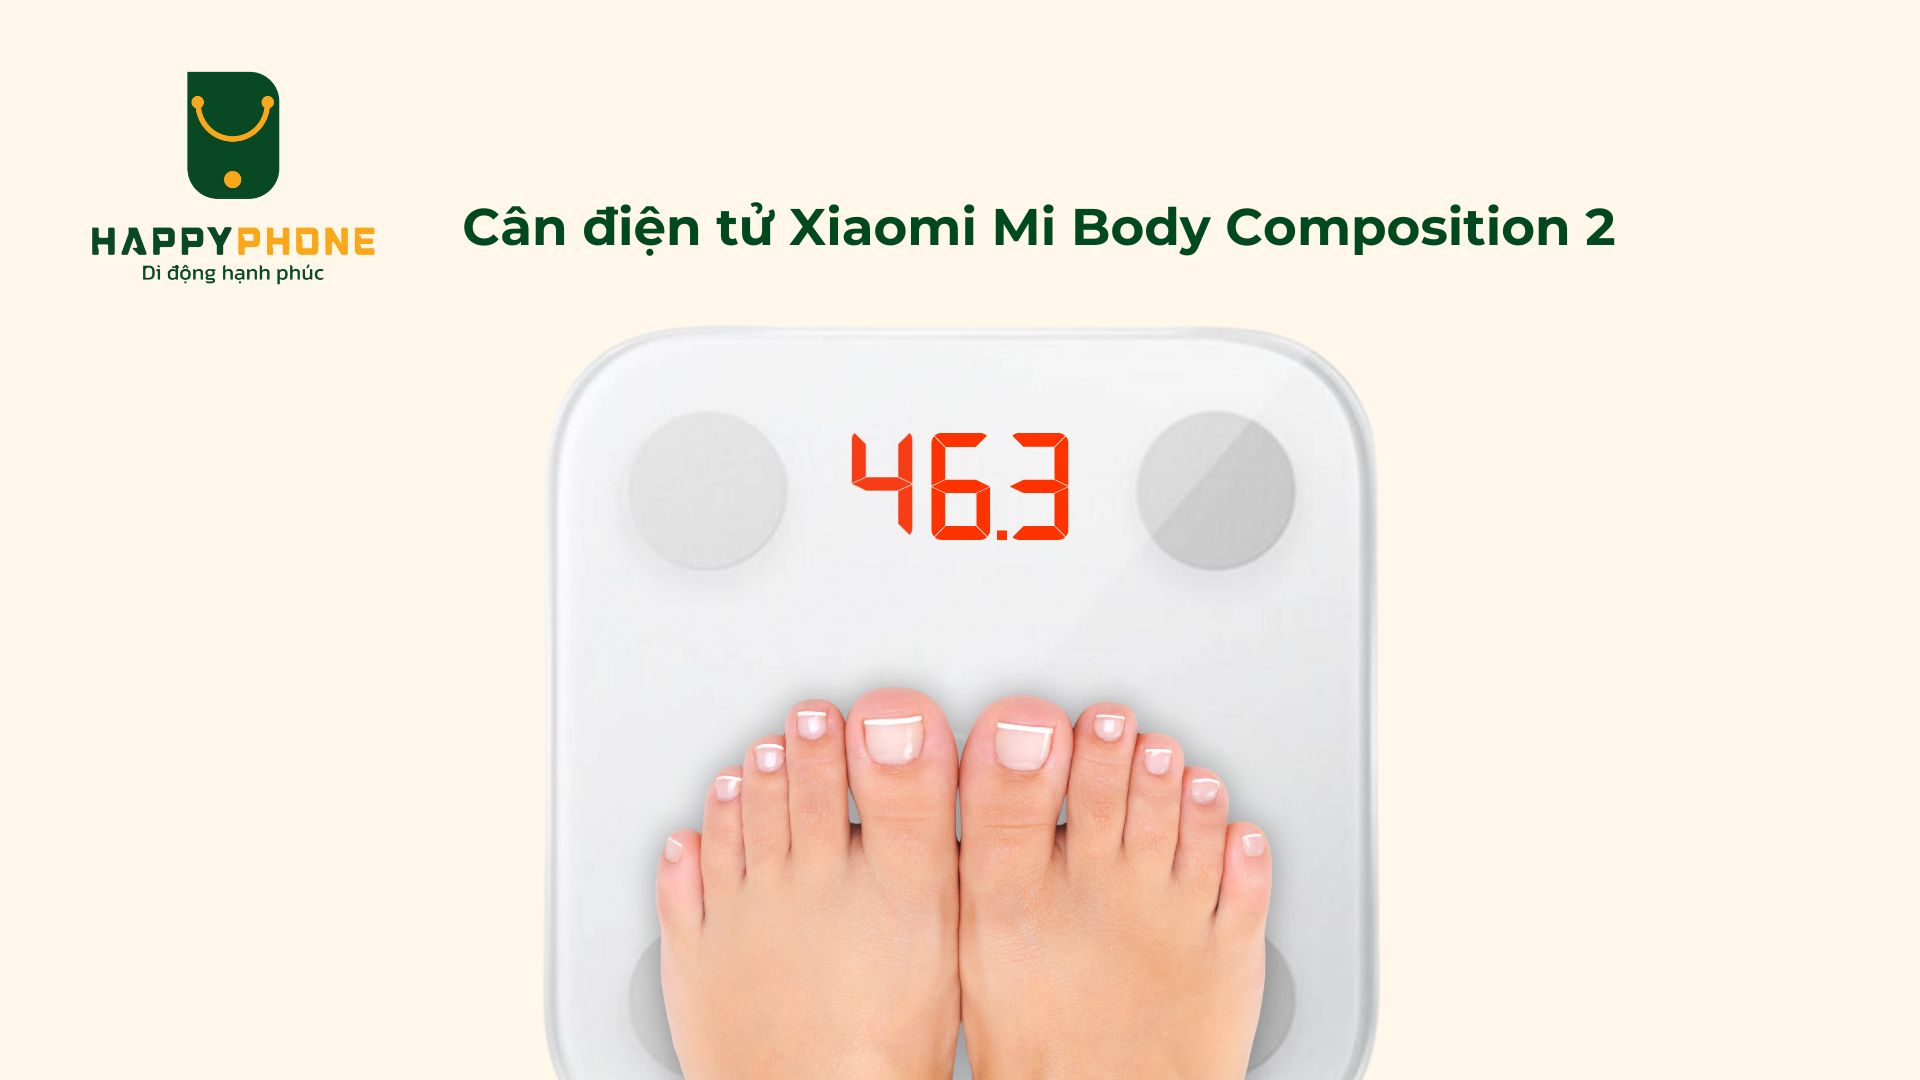 Cân điện tử Xiaomi Mi Body Composition 2 trang bị cảm biến Magan